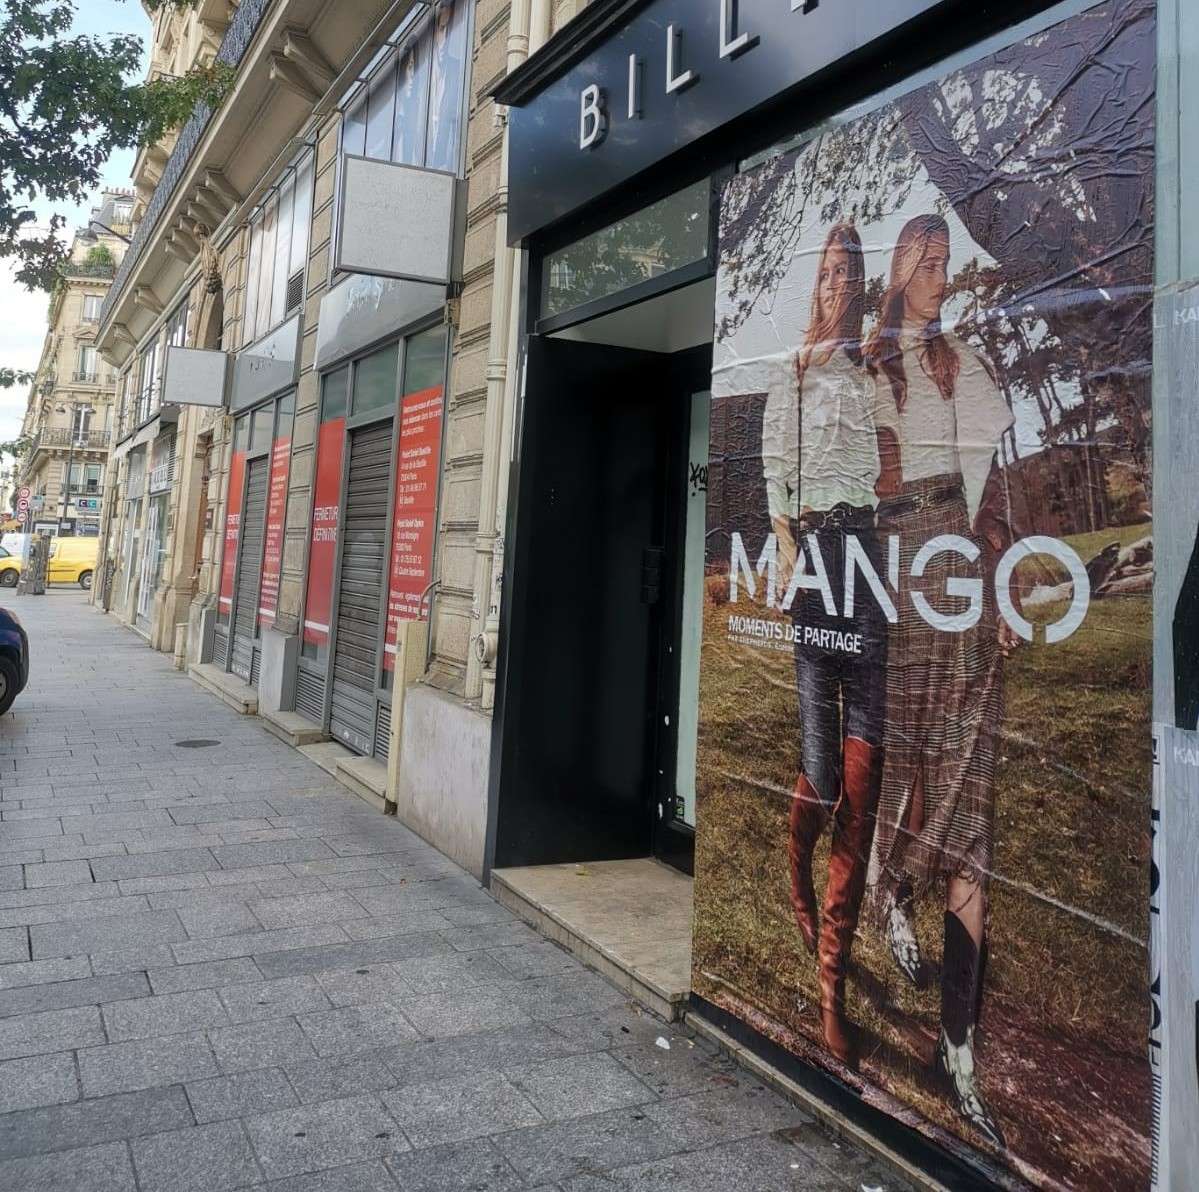 mango-affichage-sauvage-tapage-medias-street-guerilla-marketing-campagne-publicitaire-communication-france